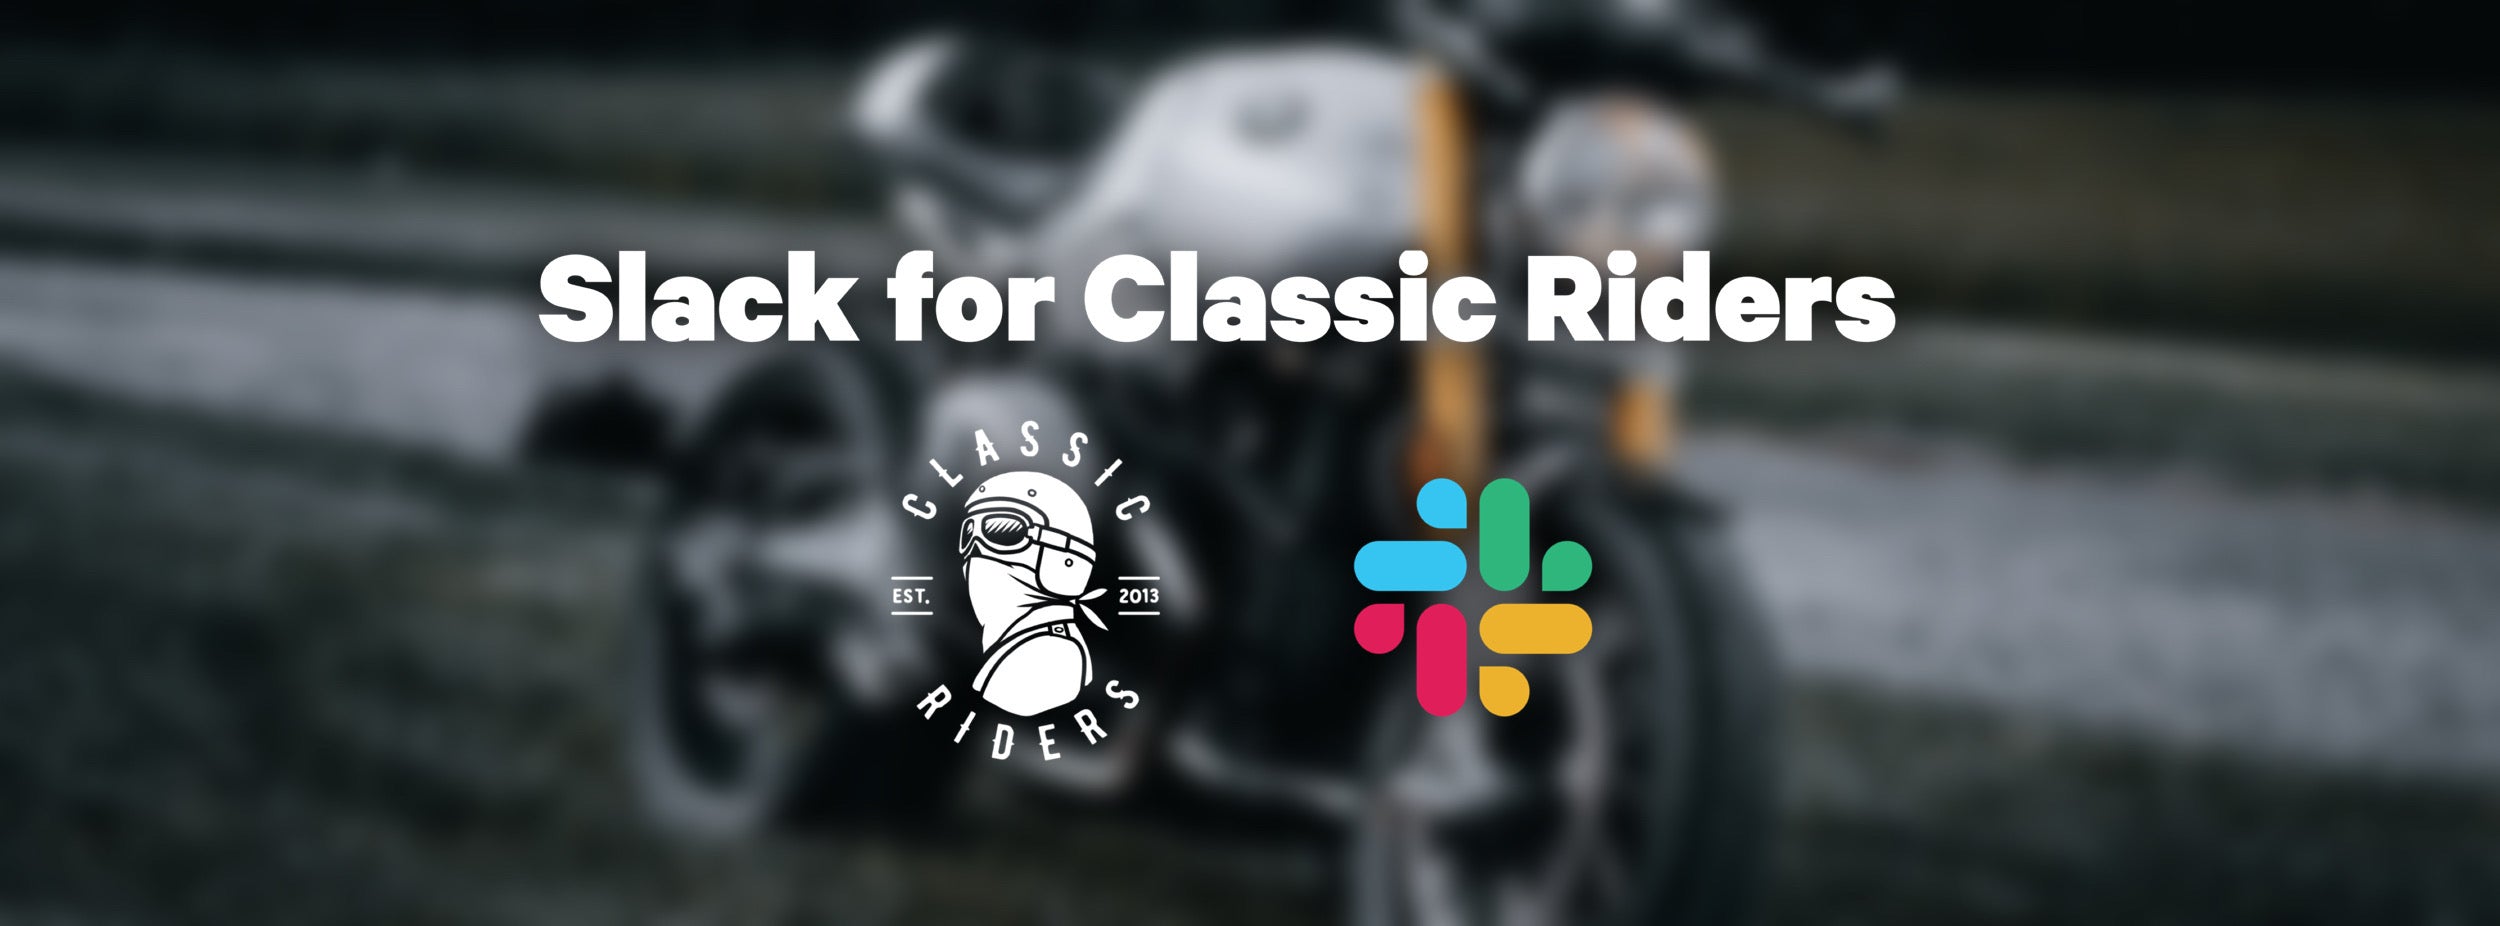 Slack for Classic Riders